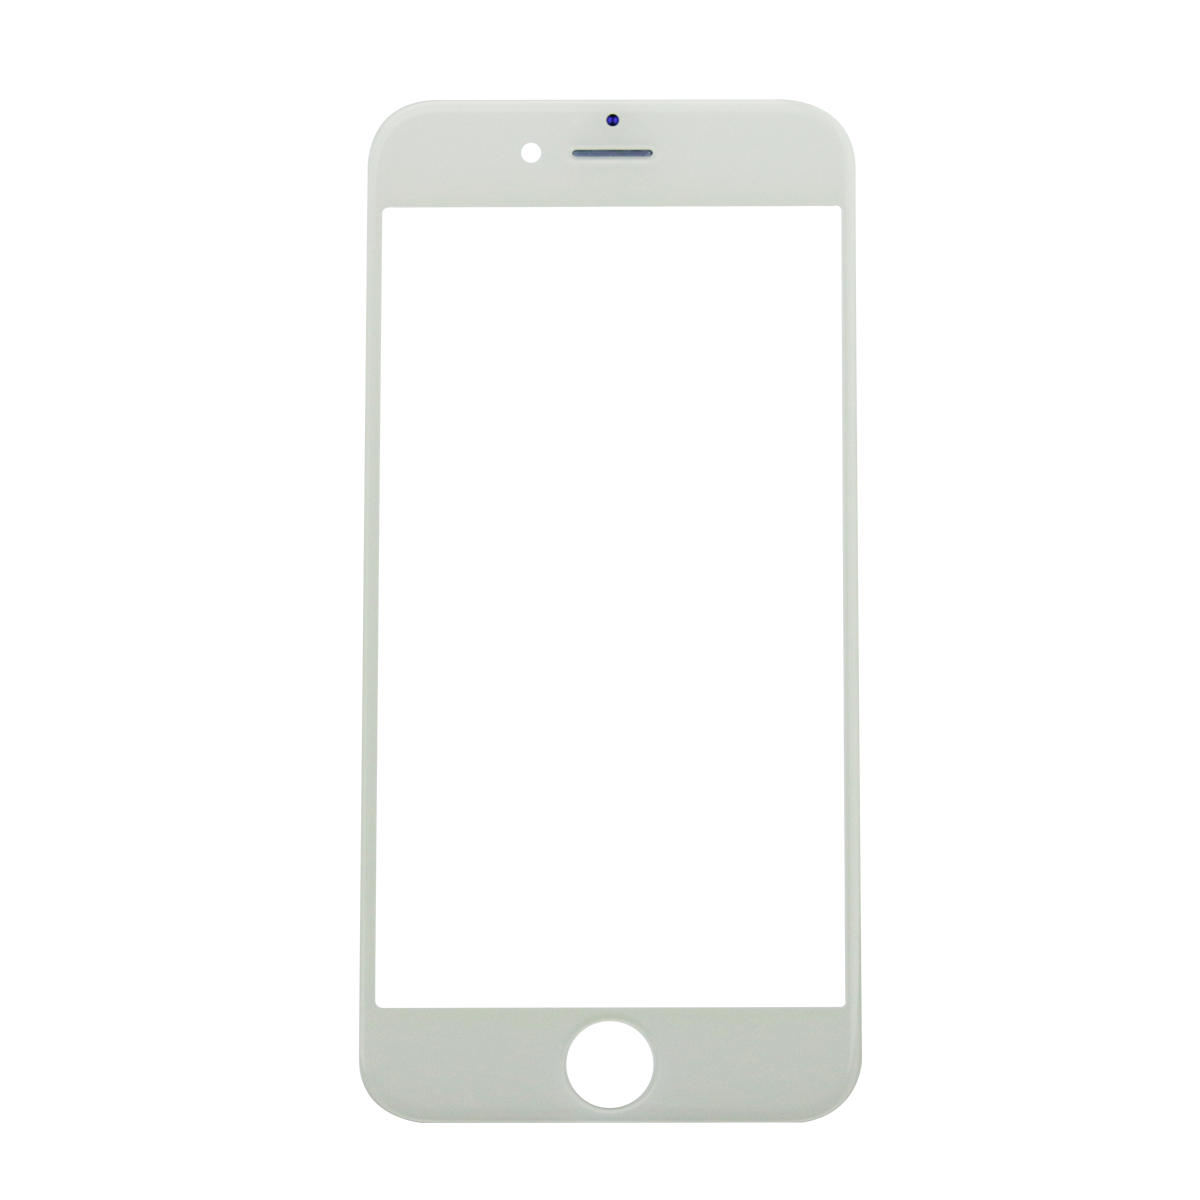 Картинка прозрачного айфона. Экран айфон 8rx белый. Айфон на прозрачном фоне. Iphone без фона. Белый айфон на прозрачном фоне.